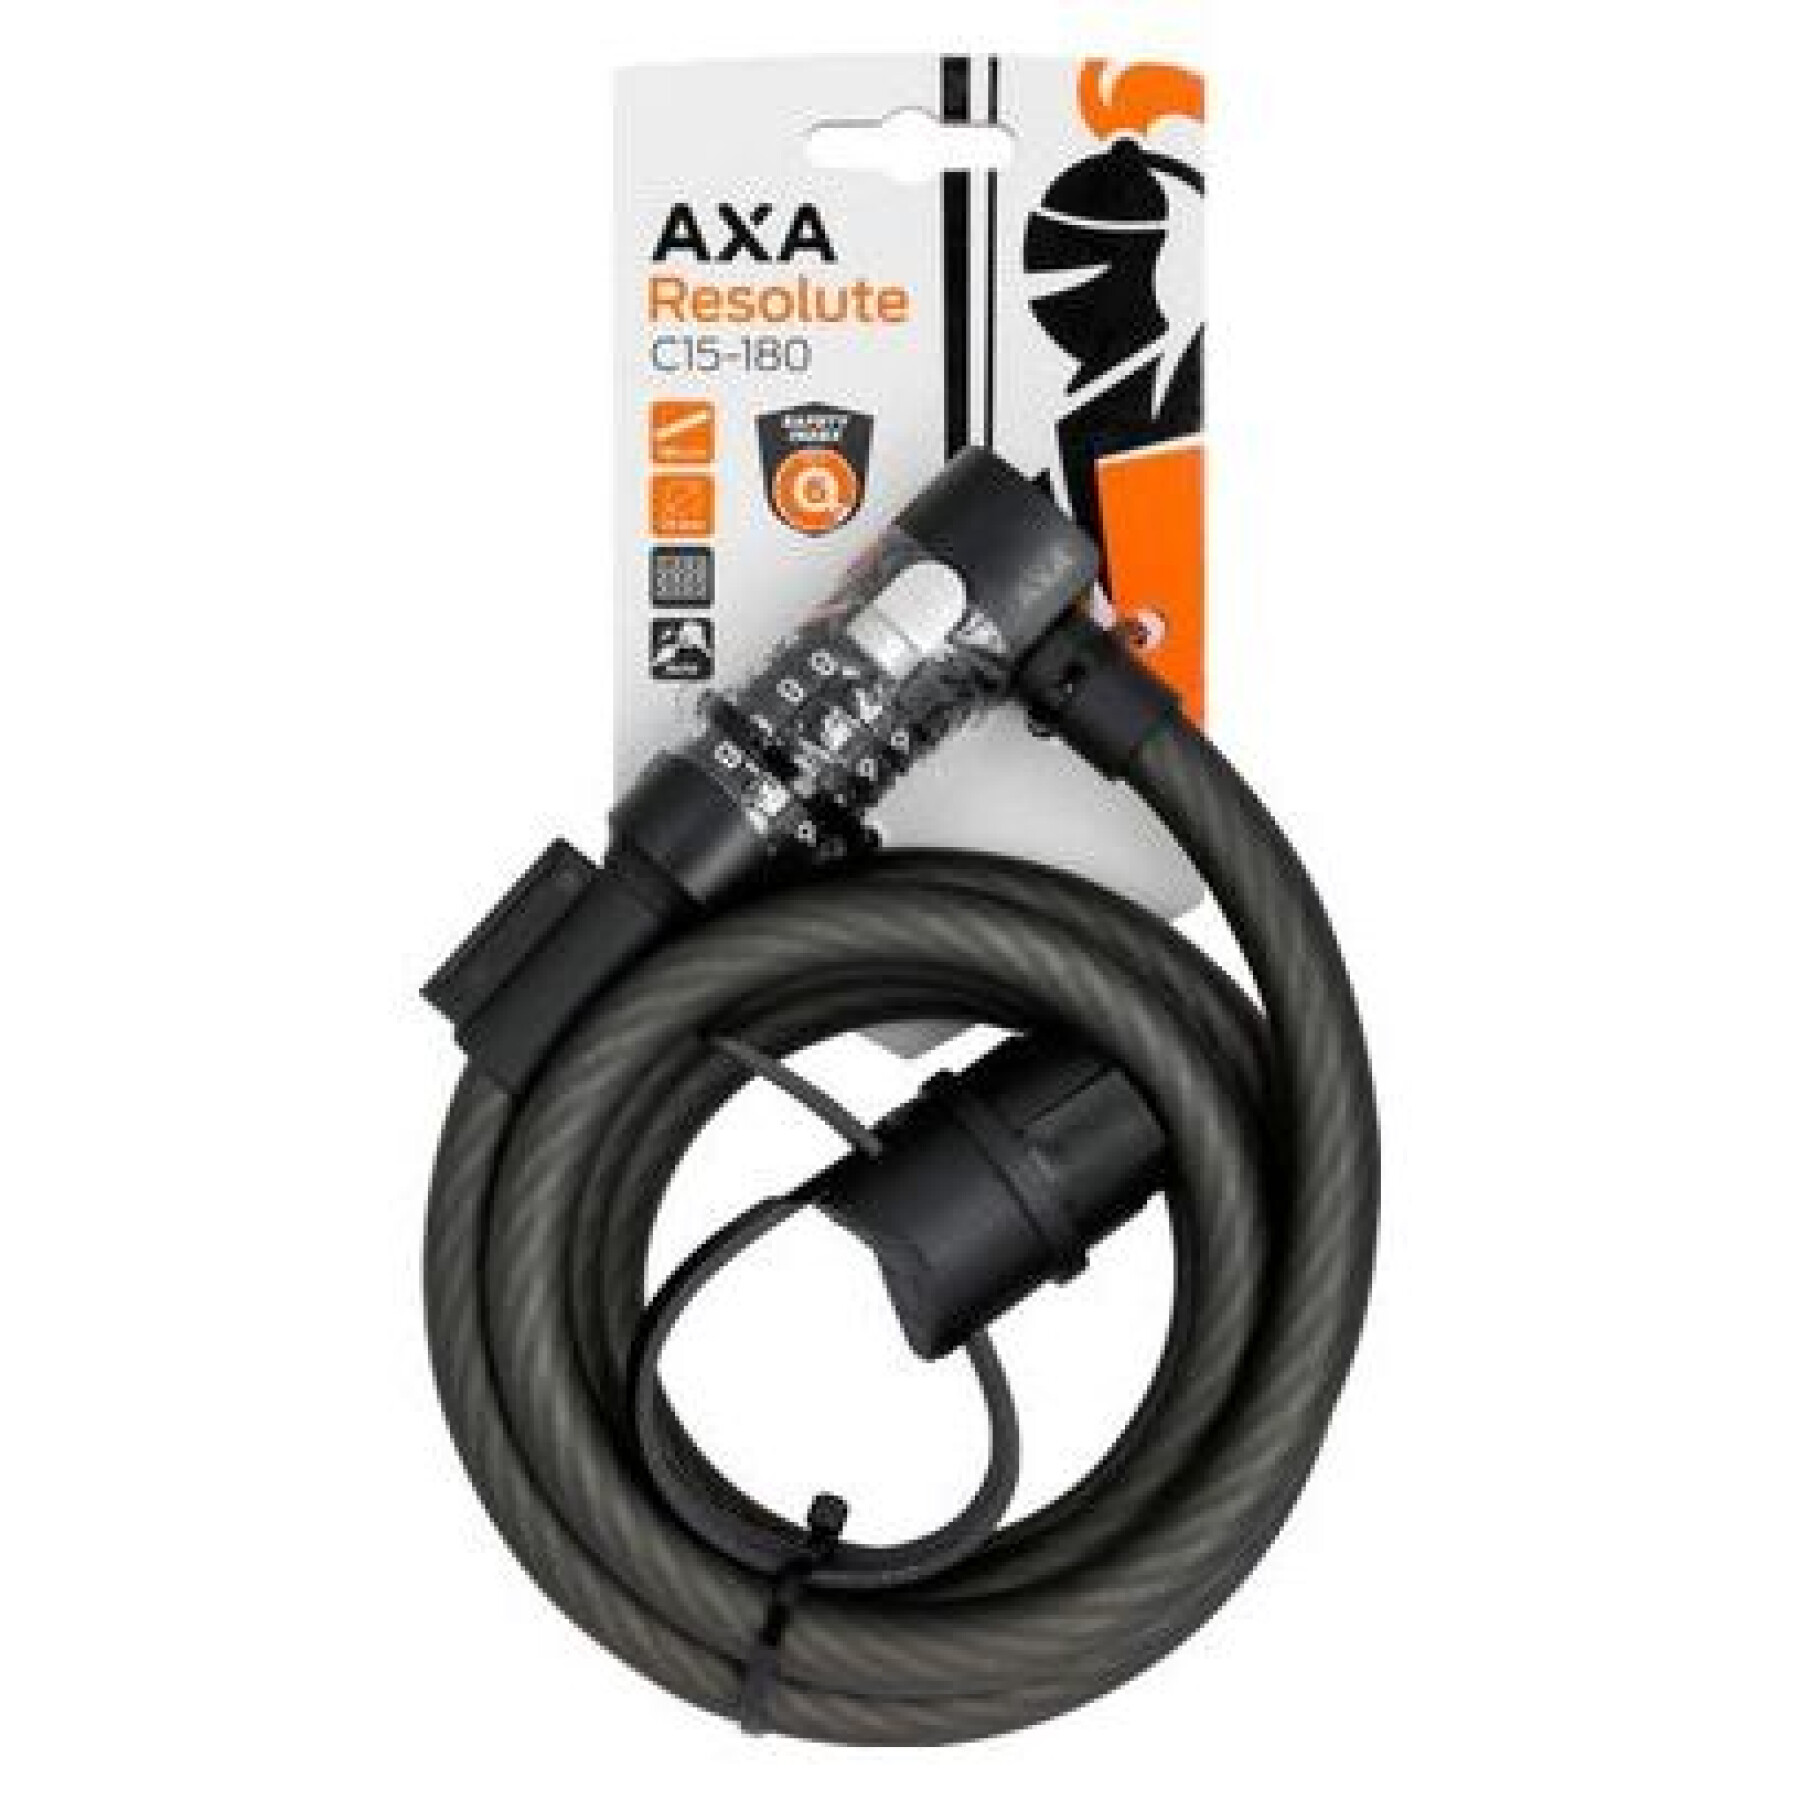 Cable lock Axa Resolute C8